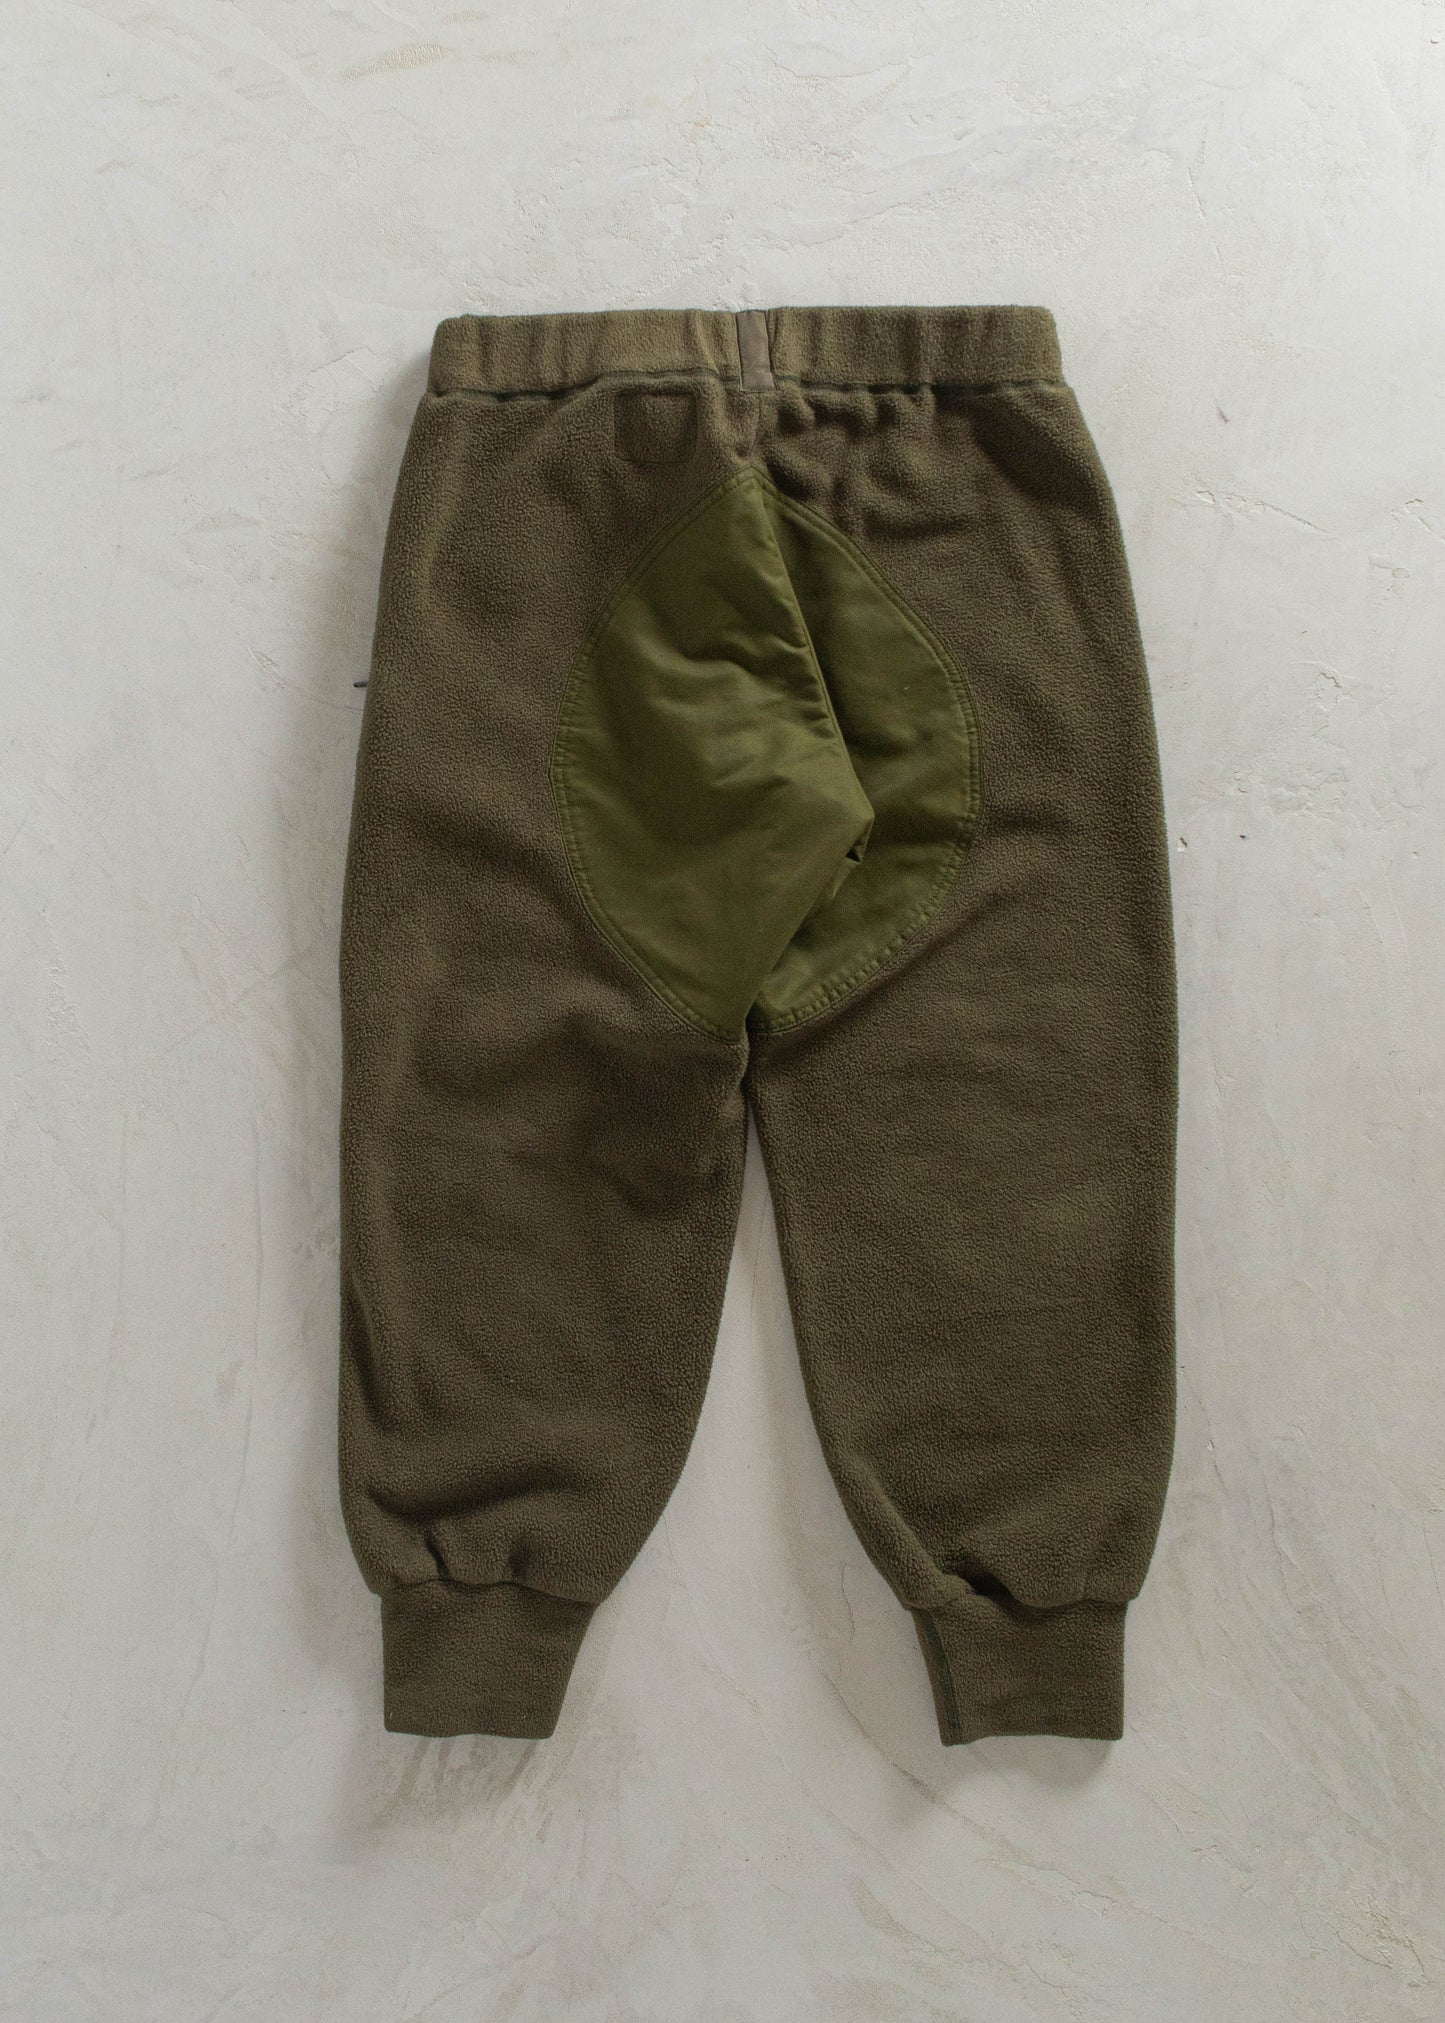 1990s Military Combat Polar Fleece Sweatpants Size L/XL